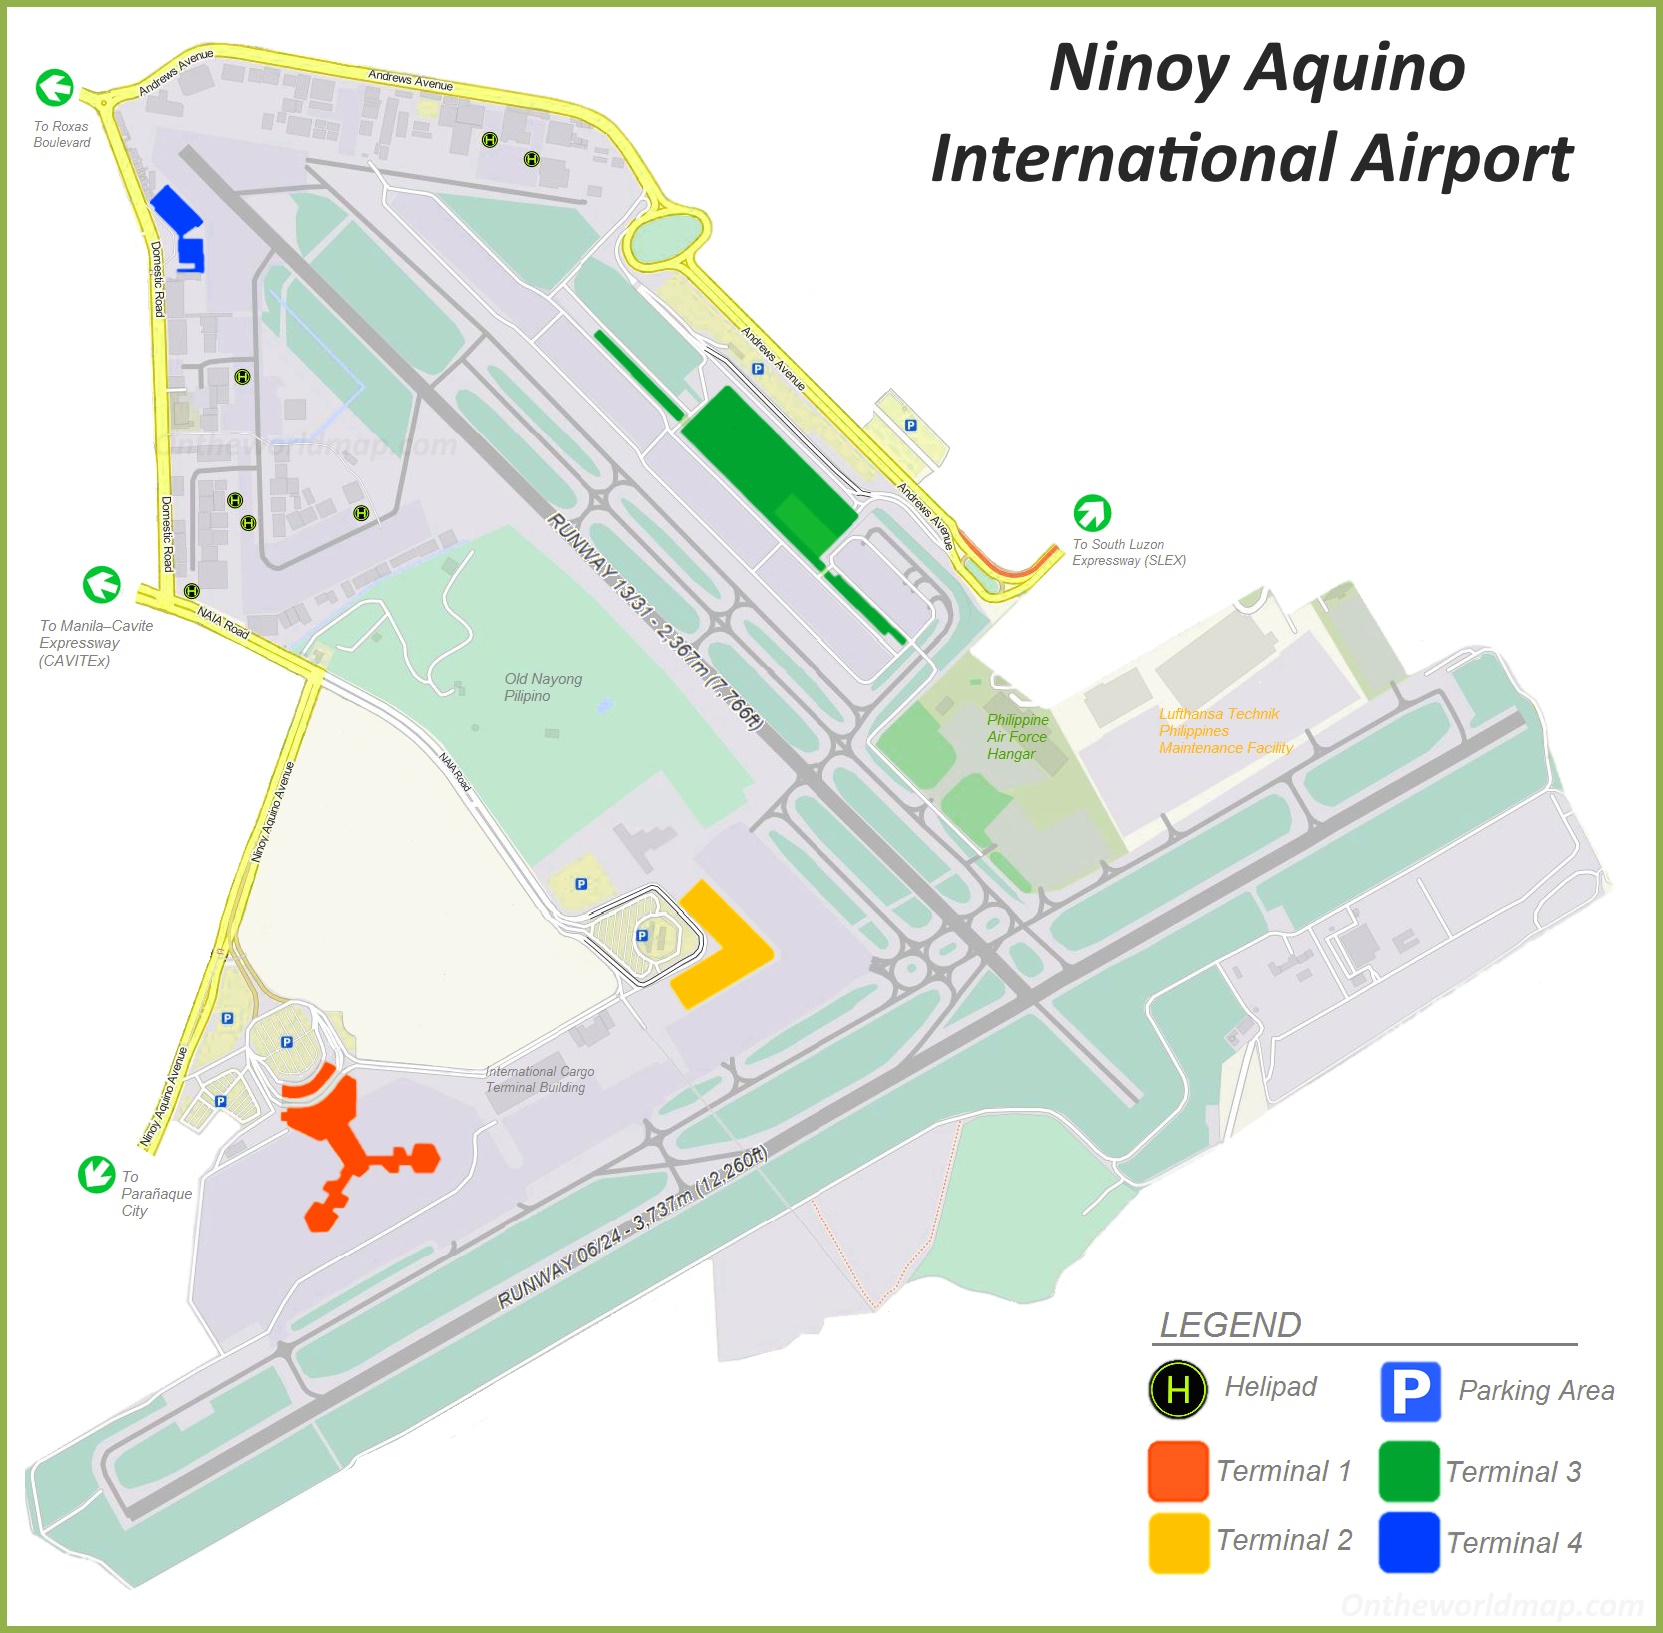 Ninoy Aquino International Airport Overview Map Naia